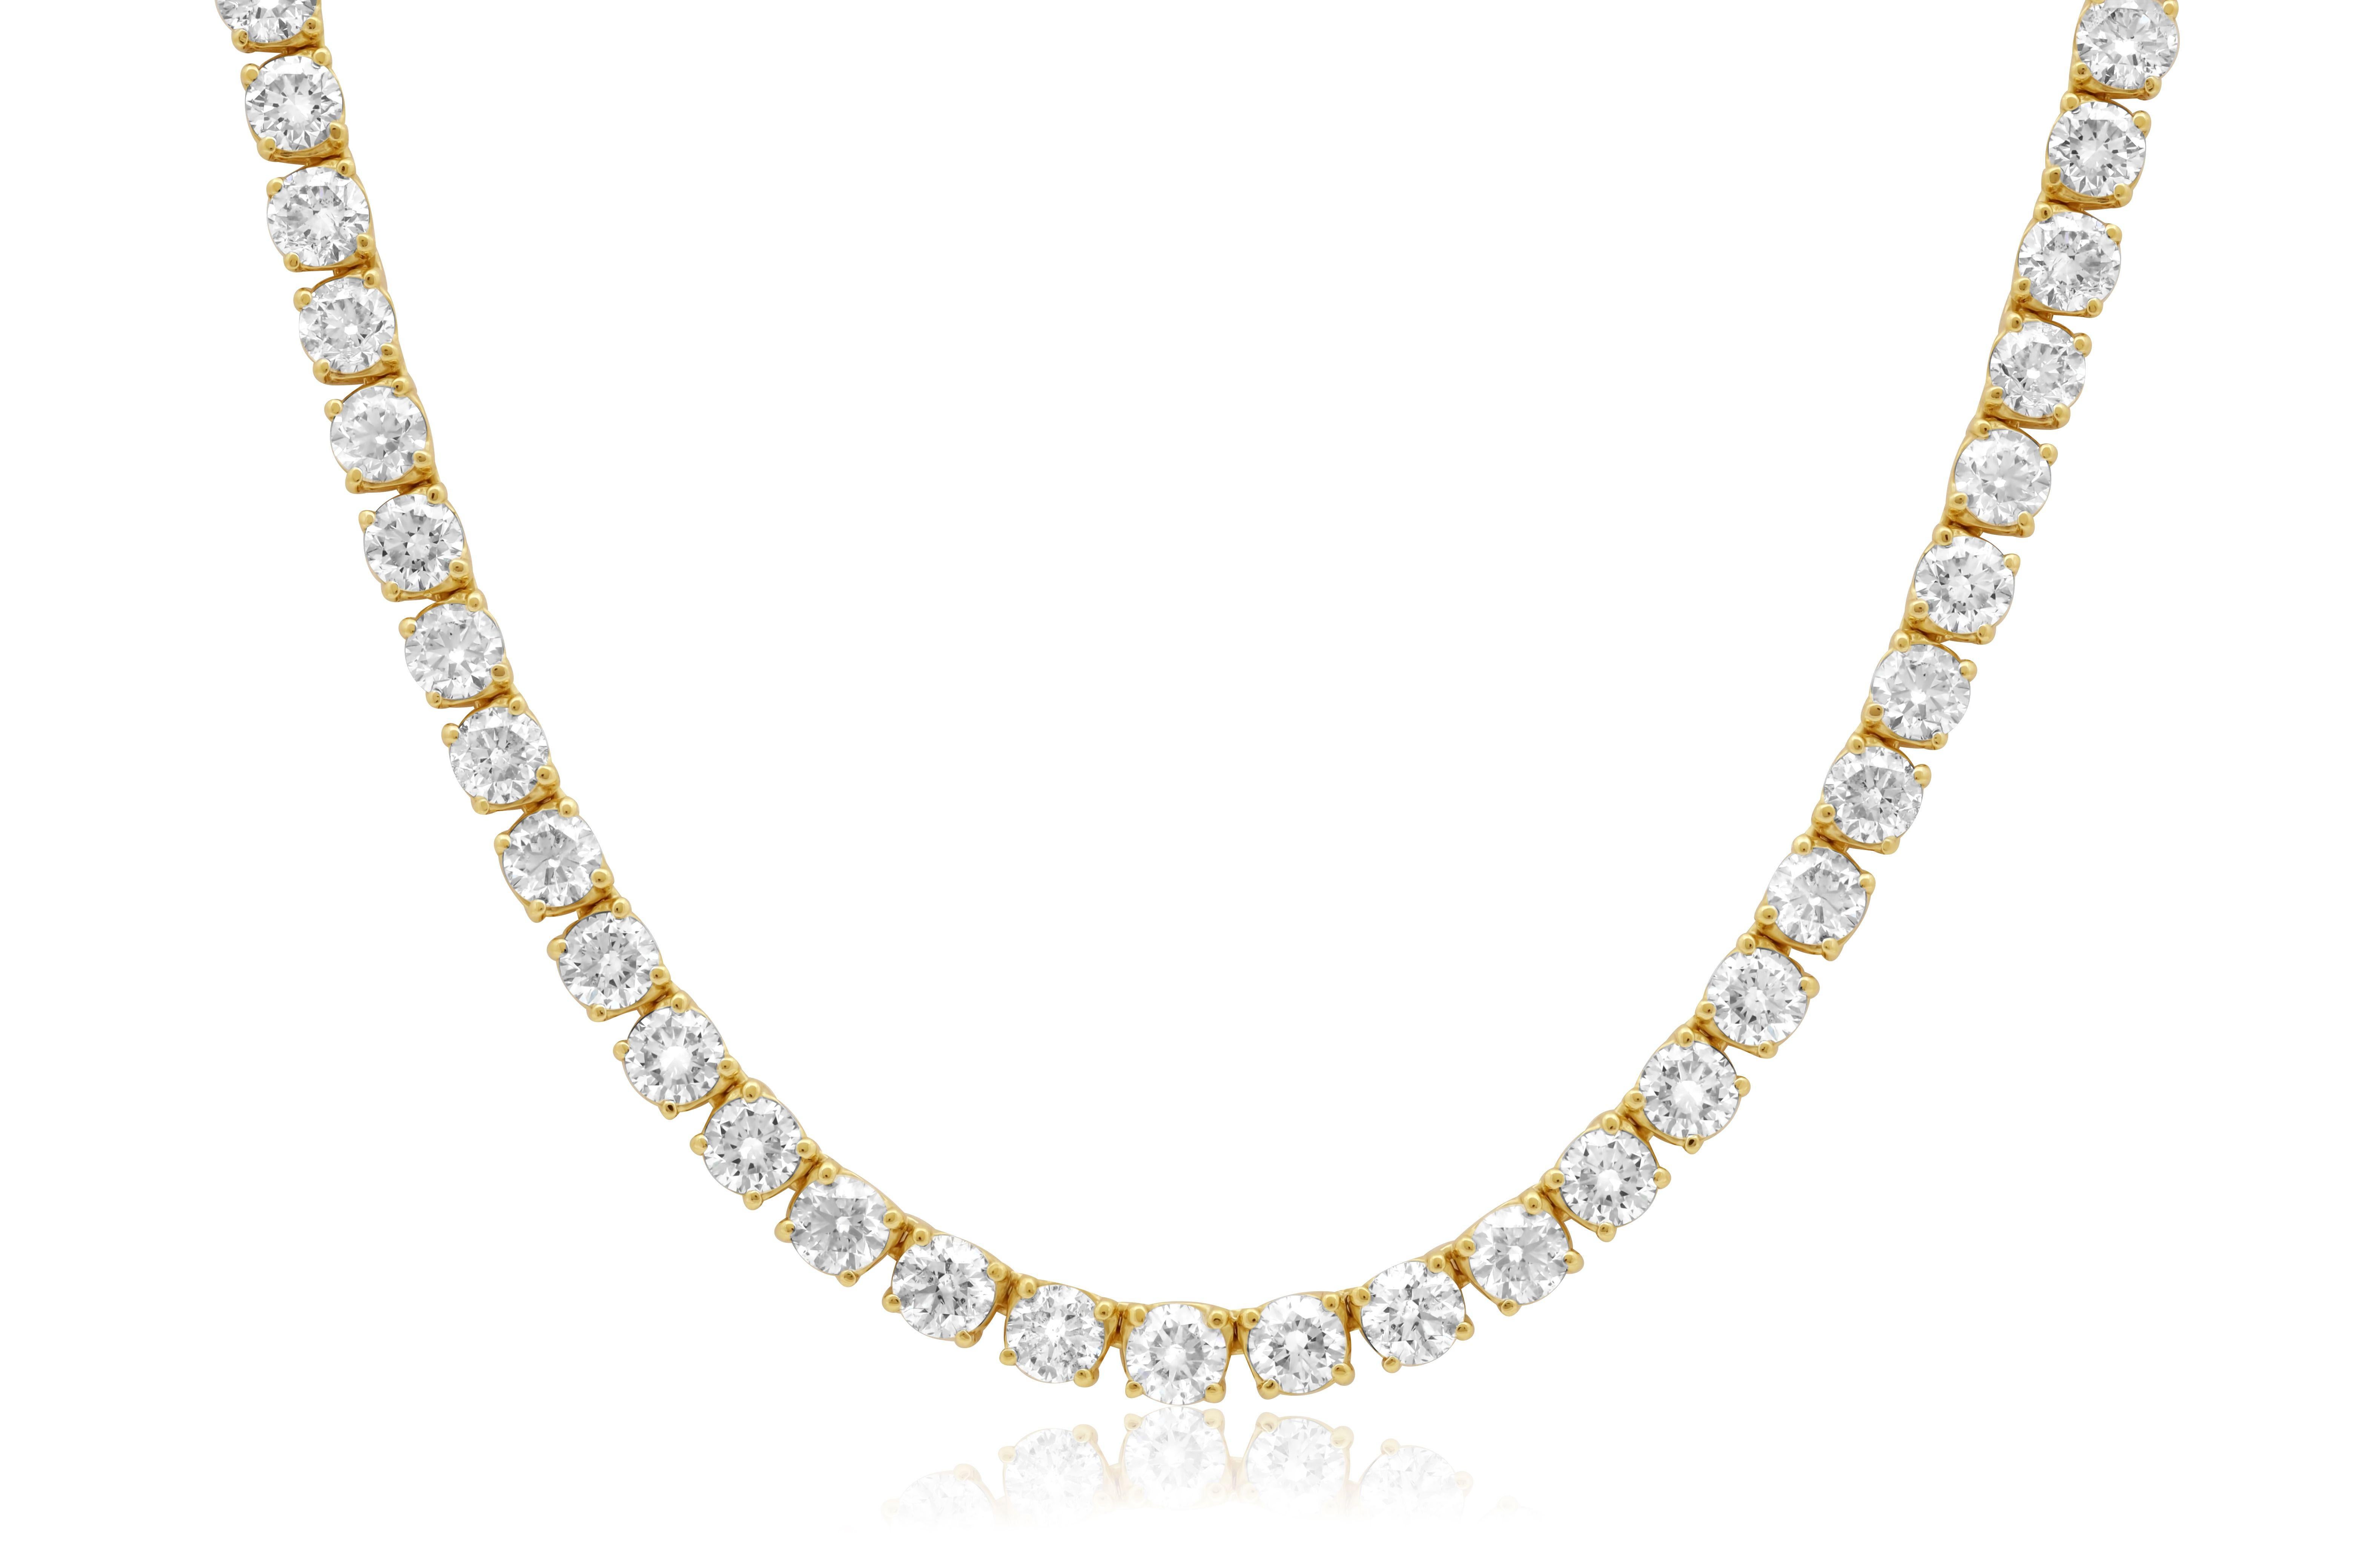 Round Cut Diana M. 28.70 Carat Diamond Tennis Necklace For Sale